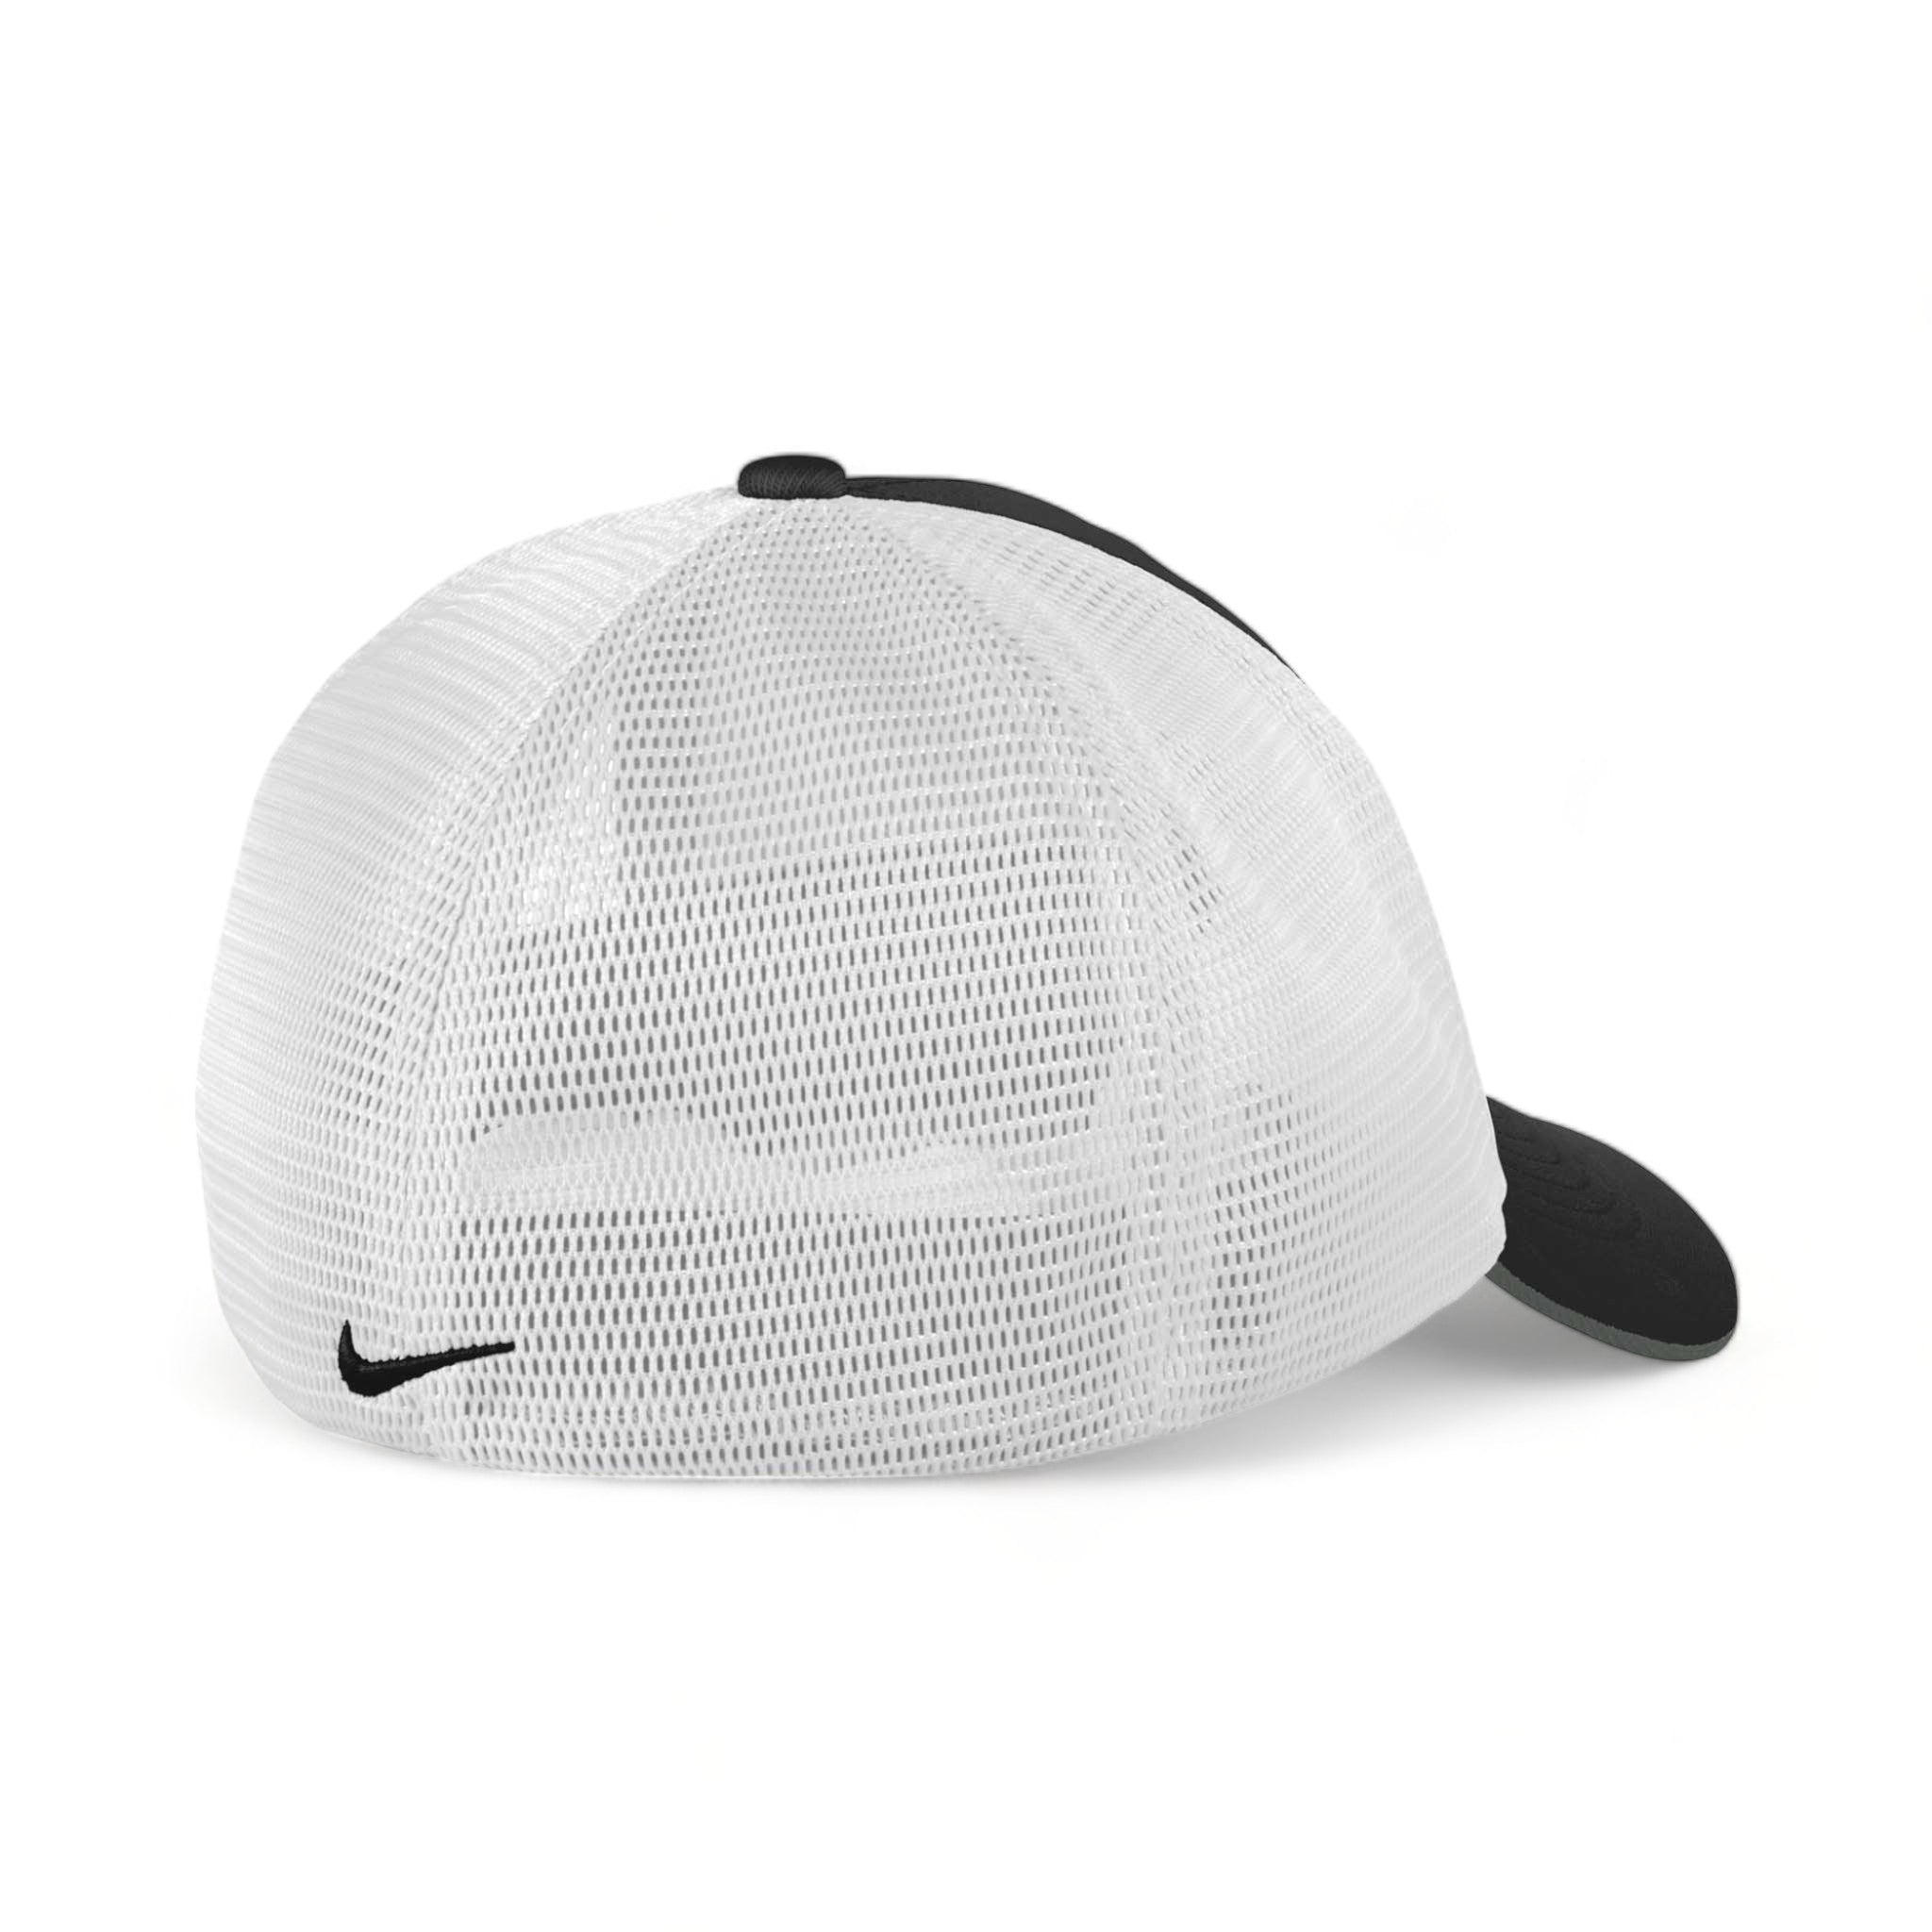 Back view of Nike NKFB6448 custom hat in black and white